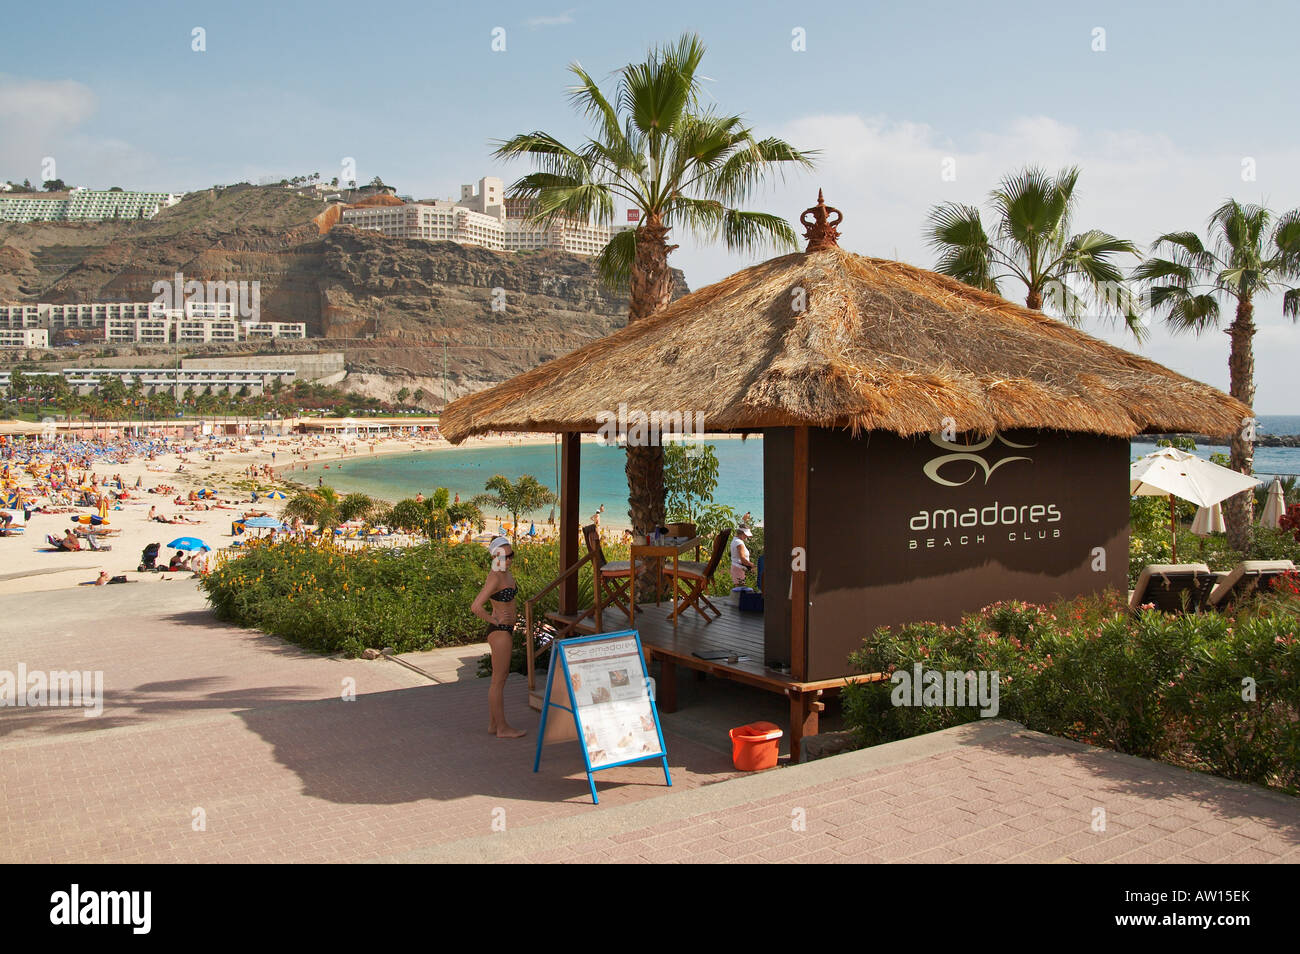 Amadores beach club massage centre overlooking Playa de los Amadores beach  near Puerto Rico on Gran Canaria Stock Photo - Alamy